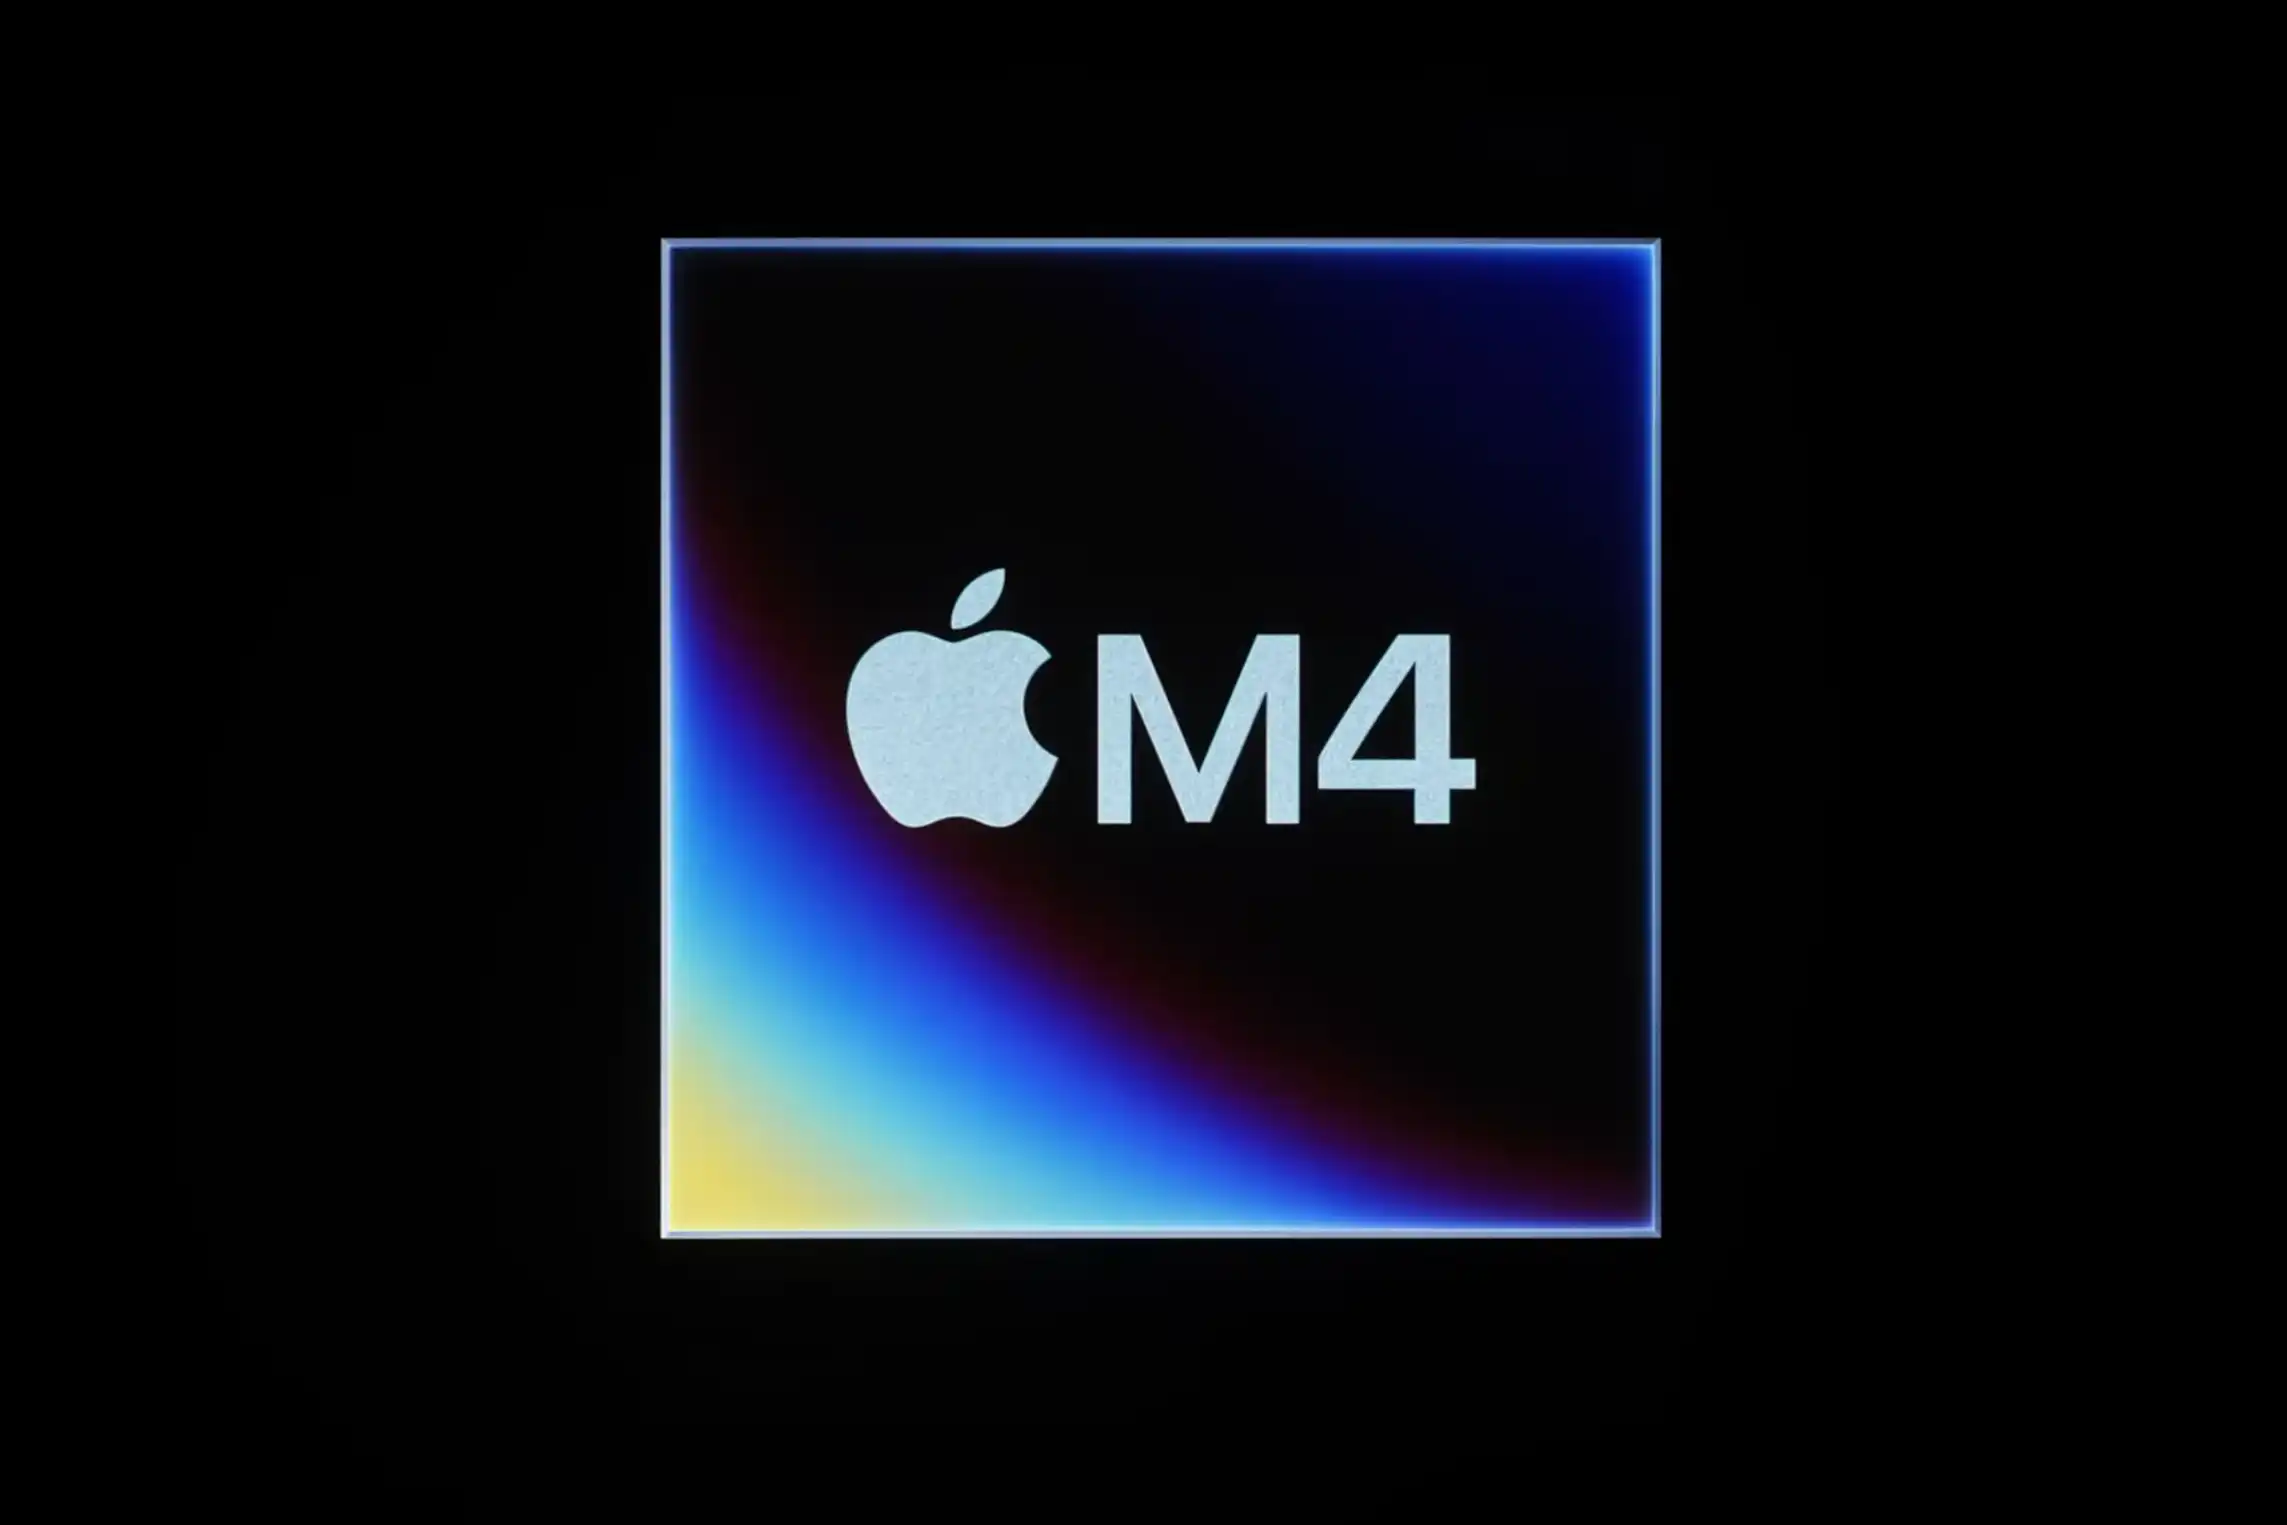  M4 processor